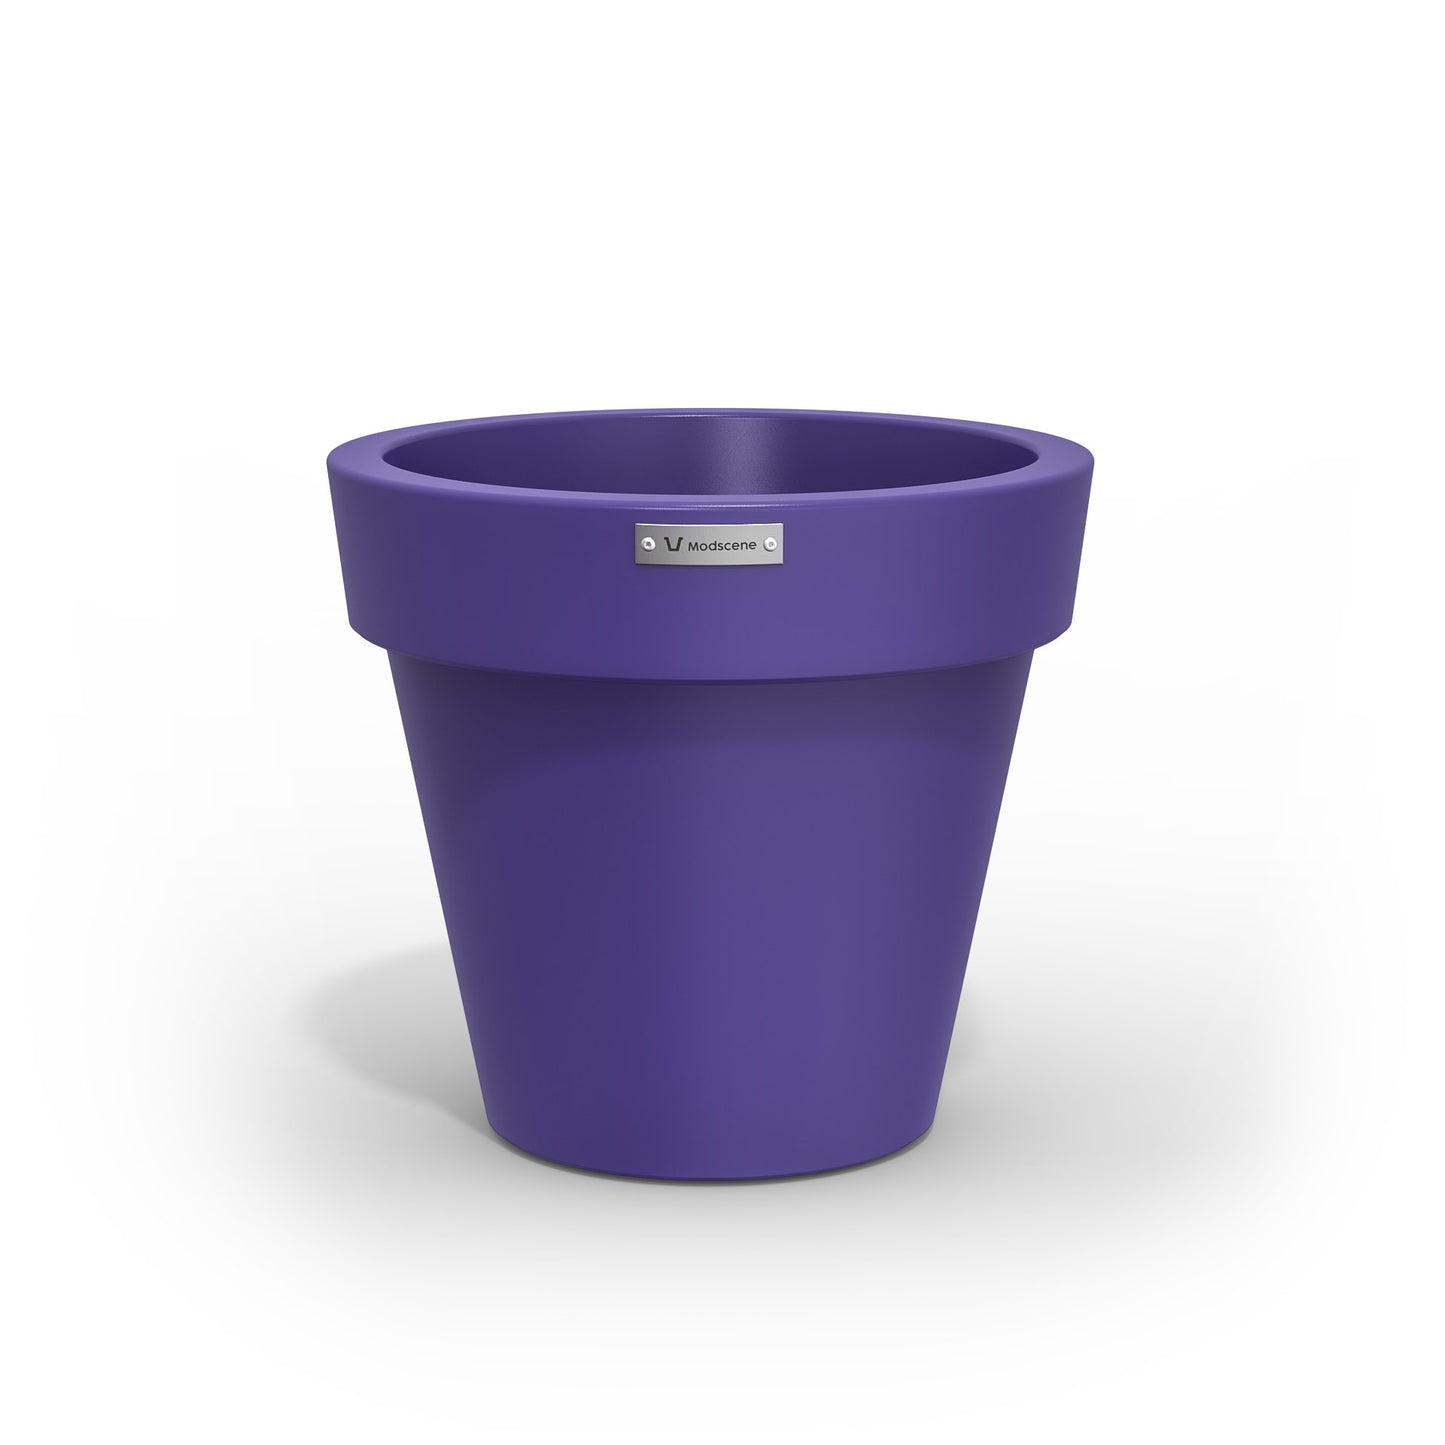 A small purple planter pot made by Modscene.